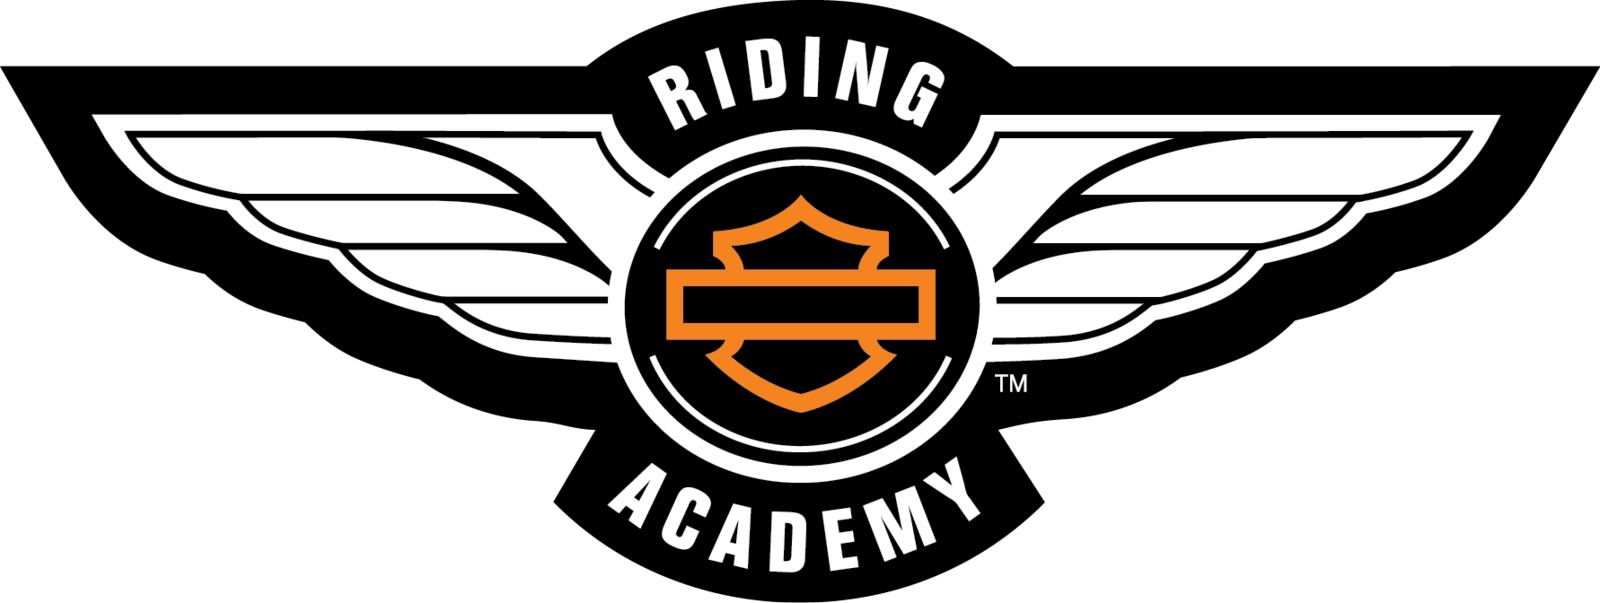 Harley Davidson Logo Riding Academy PNG